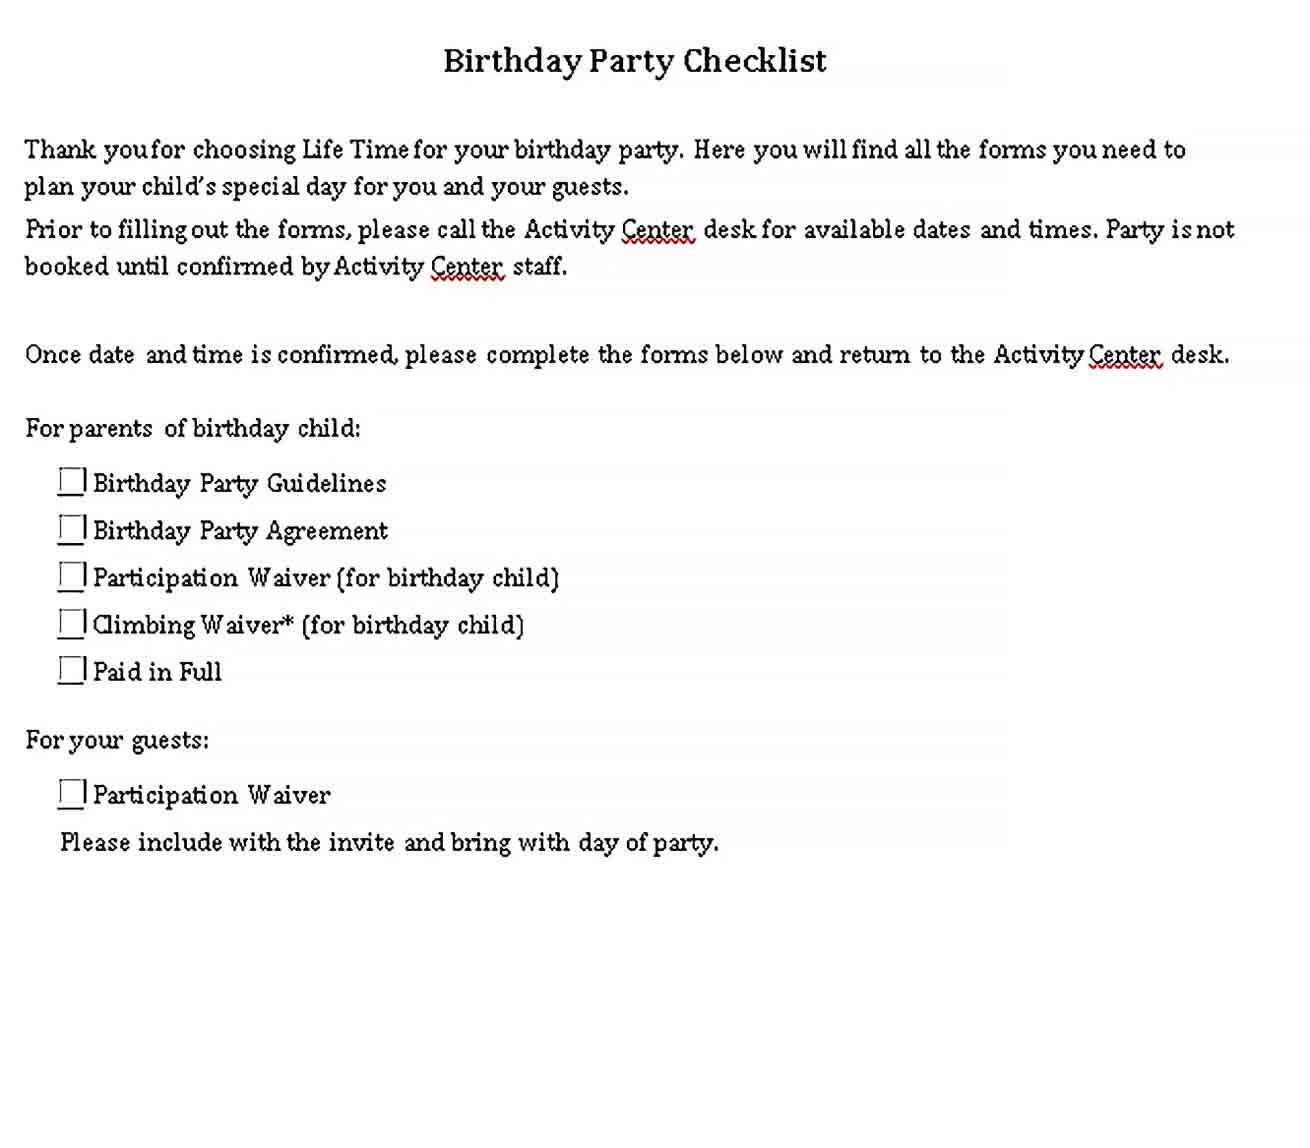 Sample Birthday Party Checklist Template